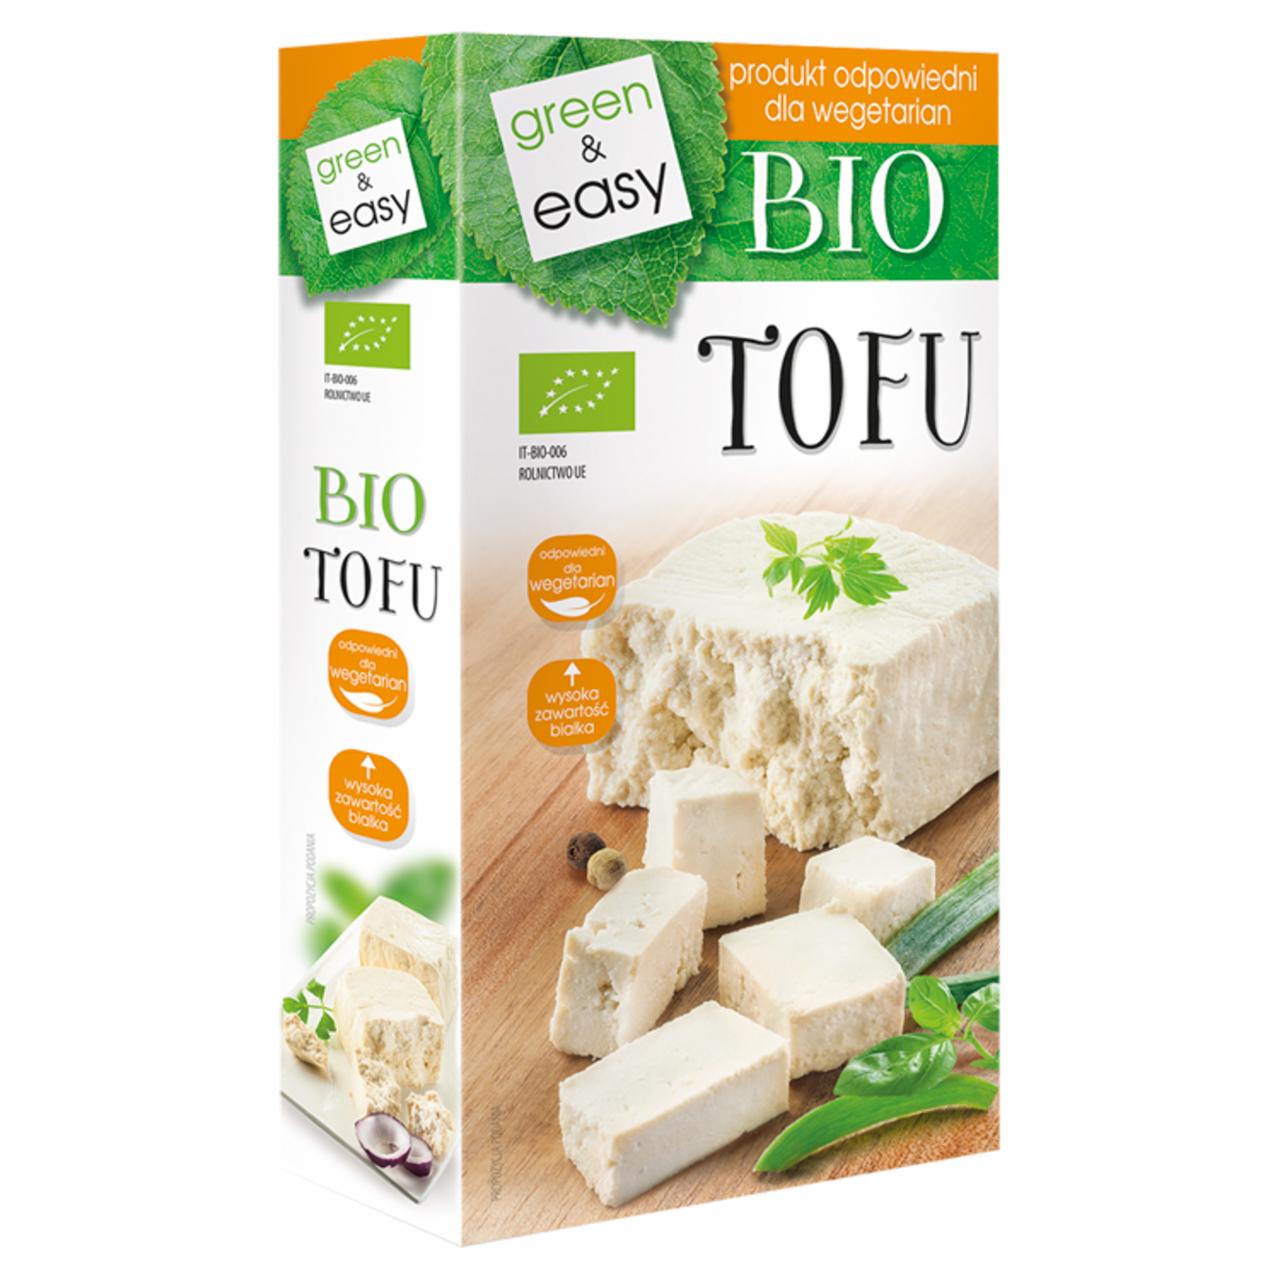 Zdjęcia - Bio Tofu 250 g